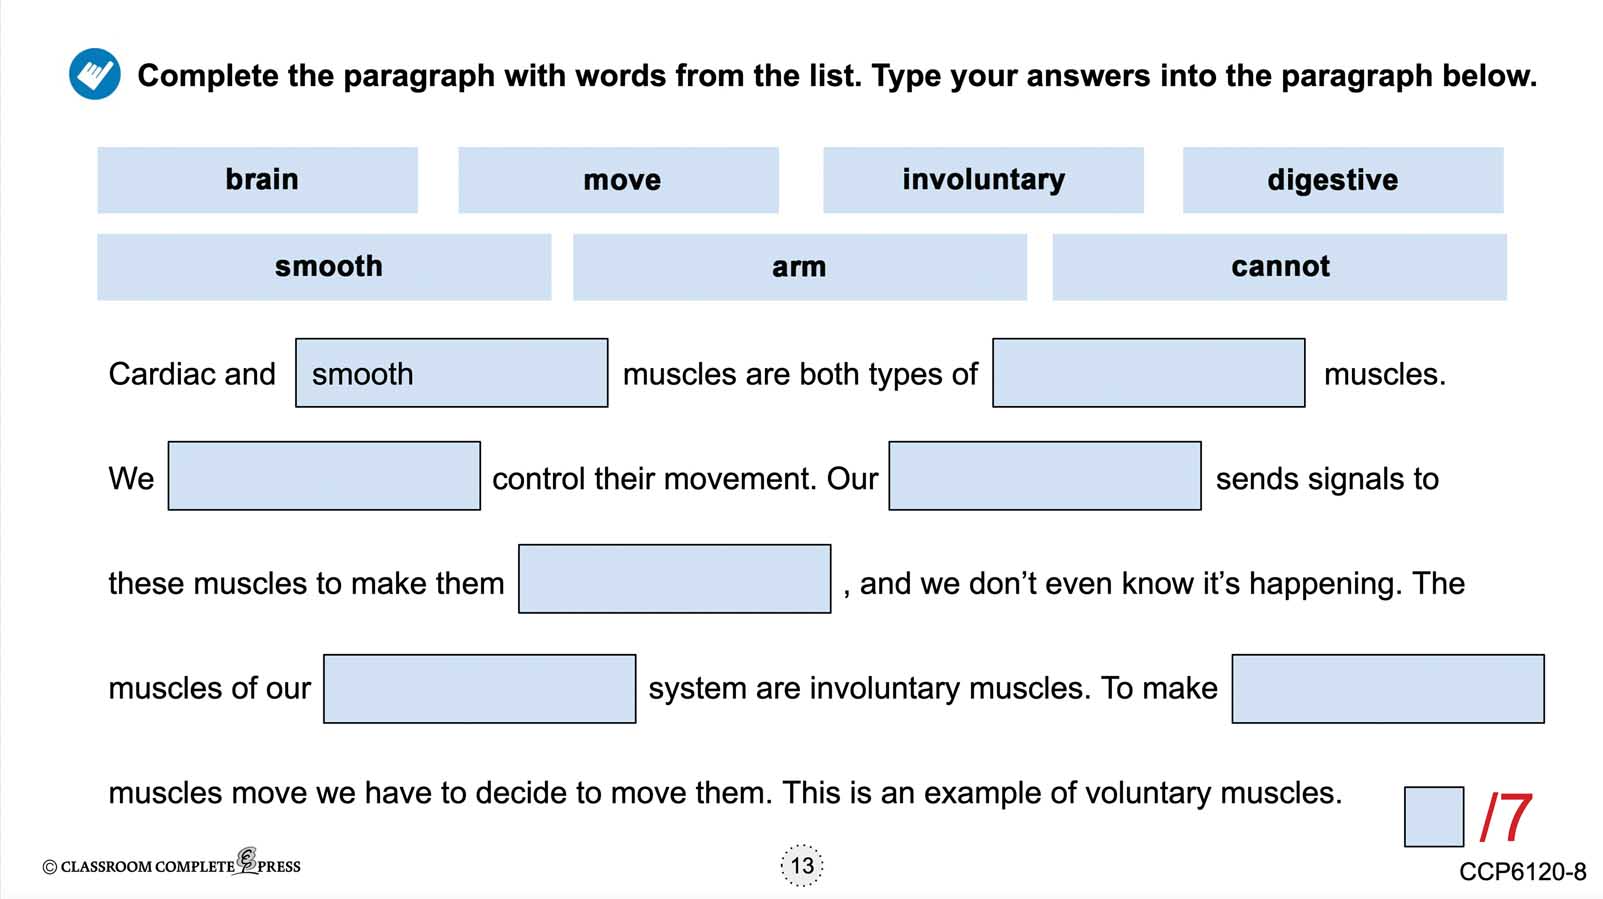 Cells, Skeletal & Muscular Systems: The Muscular System – Movement - Google Slides Gr. 5-8 - eBook